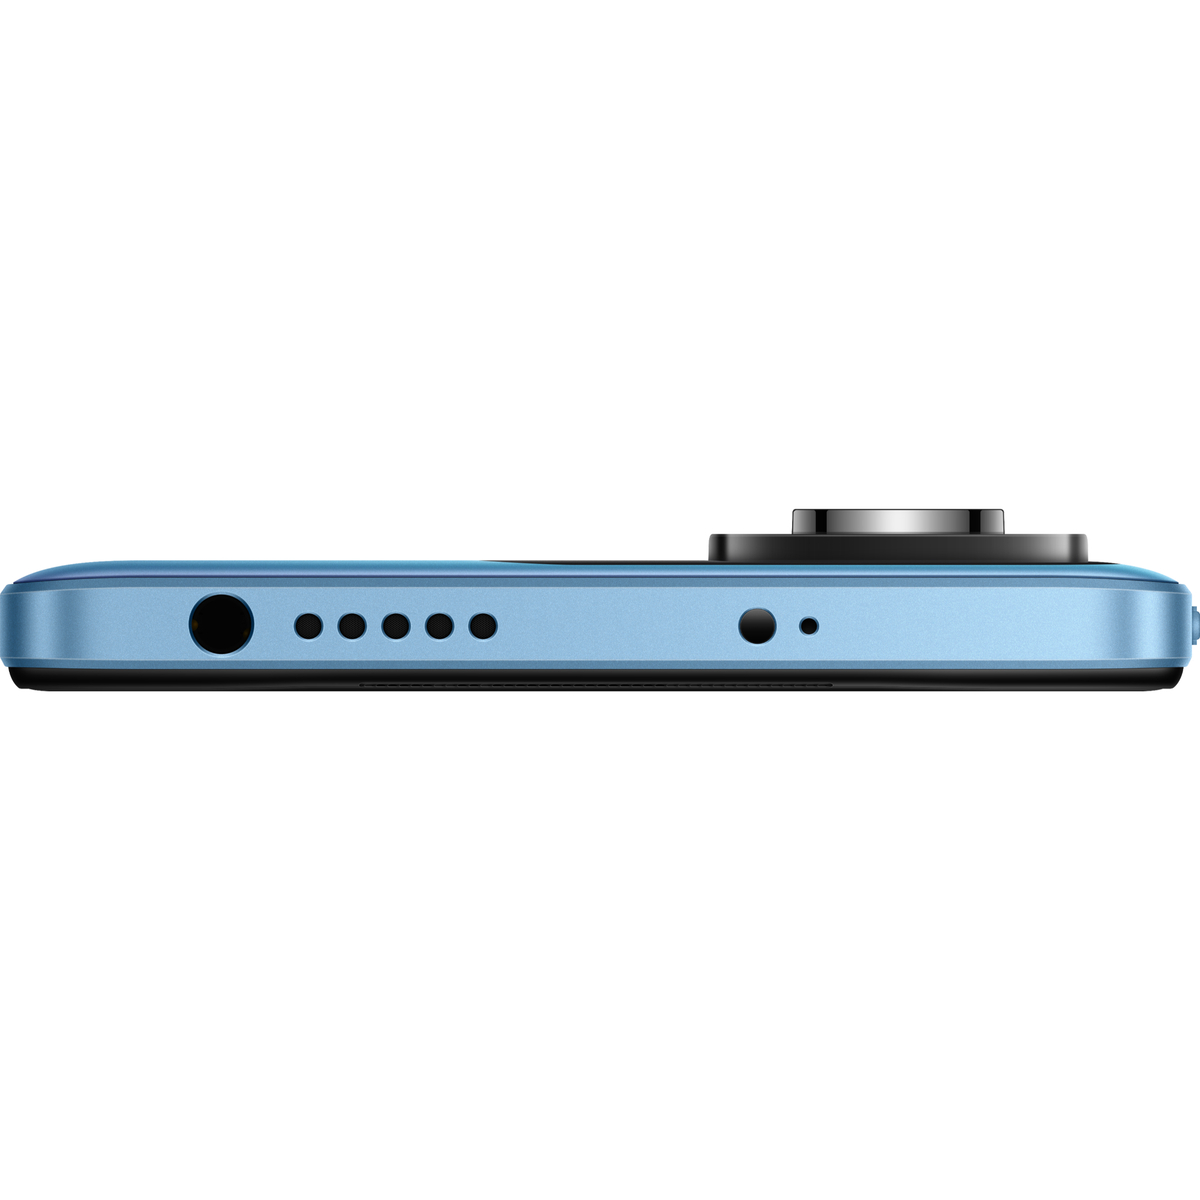 Global Version Xiaomi Redmi Note 12S 8GB 256GB Helio G96 108MP Camera 90Hz  6.43 AMOLED DotDisplay